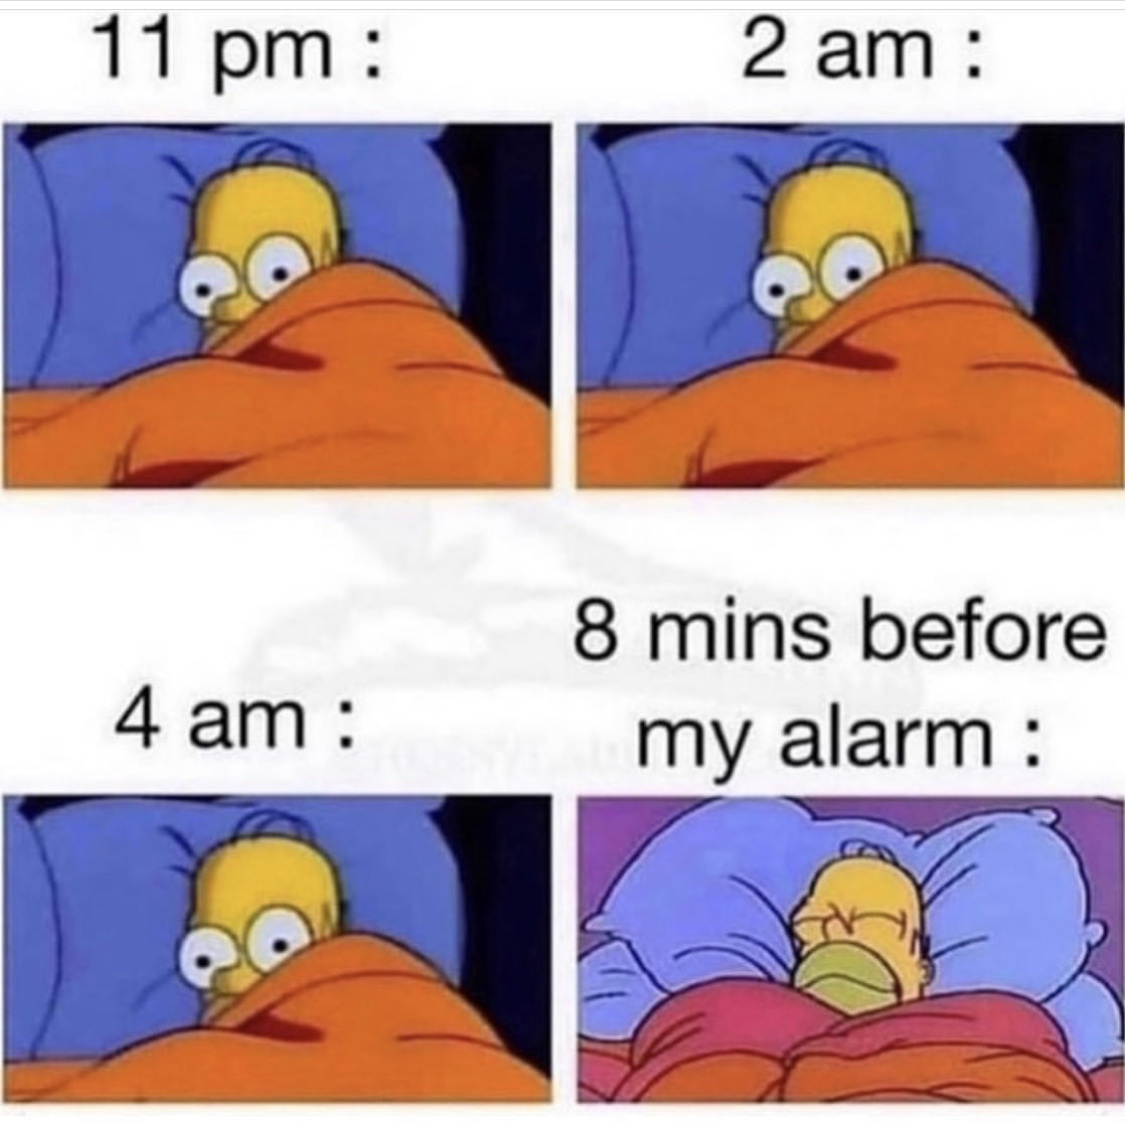 cant sleep meme - 11 pm 2 am 4 am 8 mins before my alarm